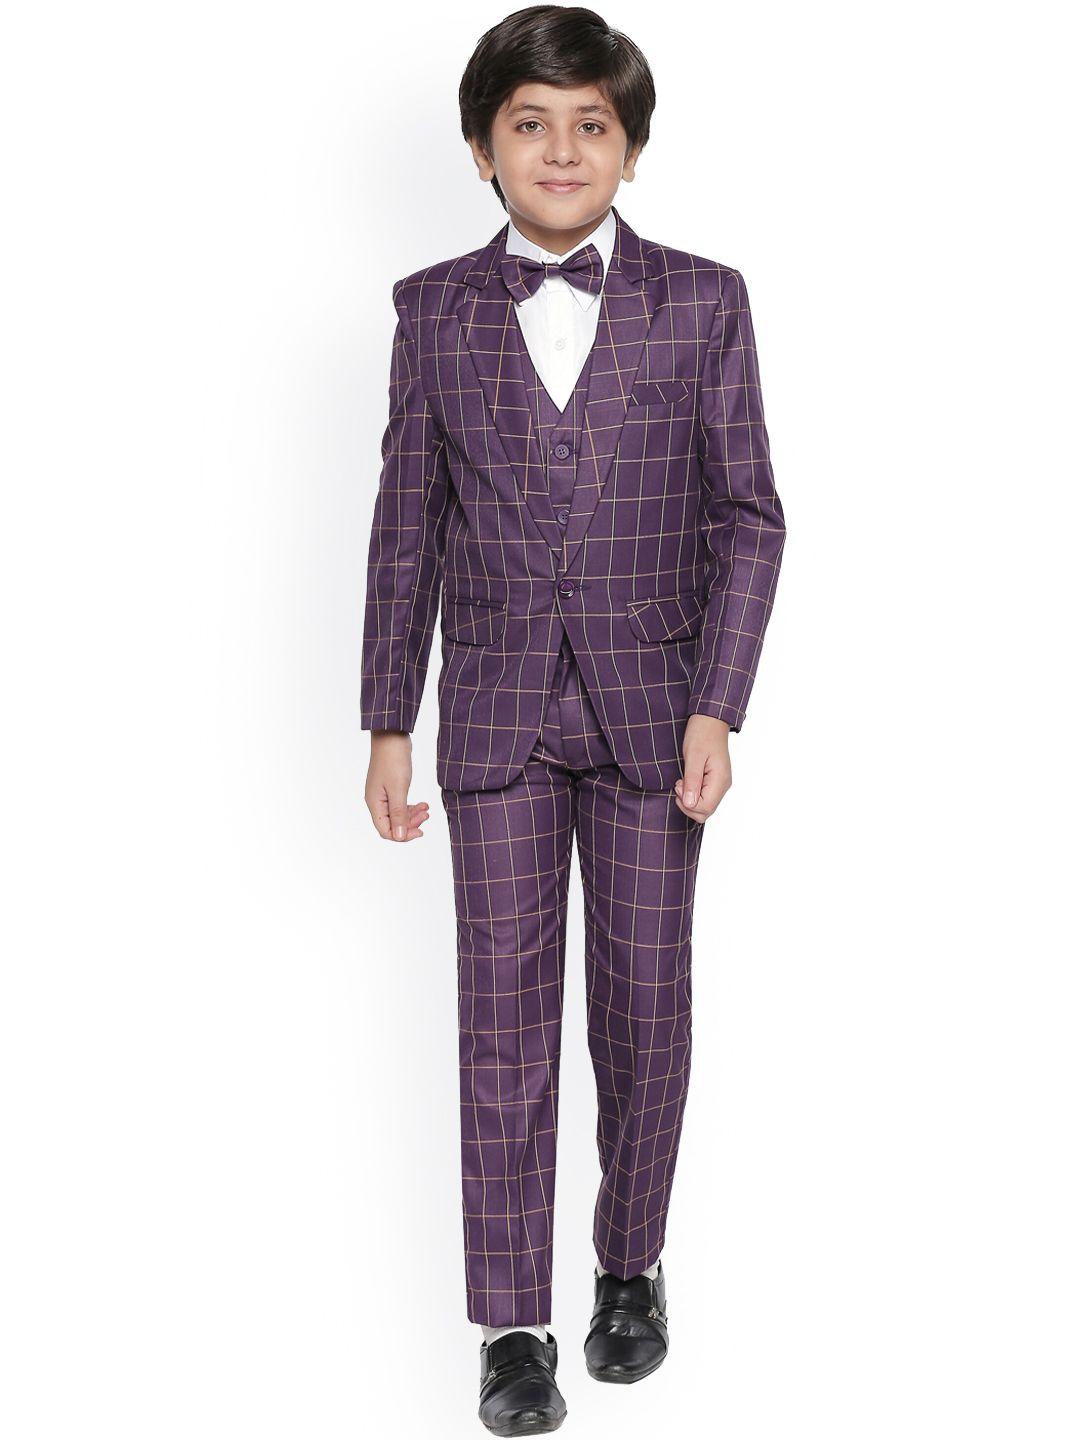 jeetethnics boys purple checked 4 piece party suit